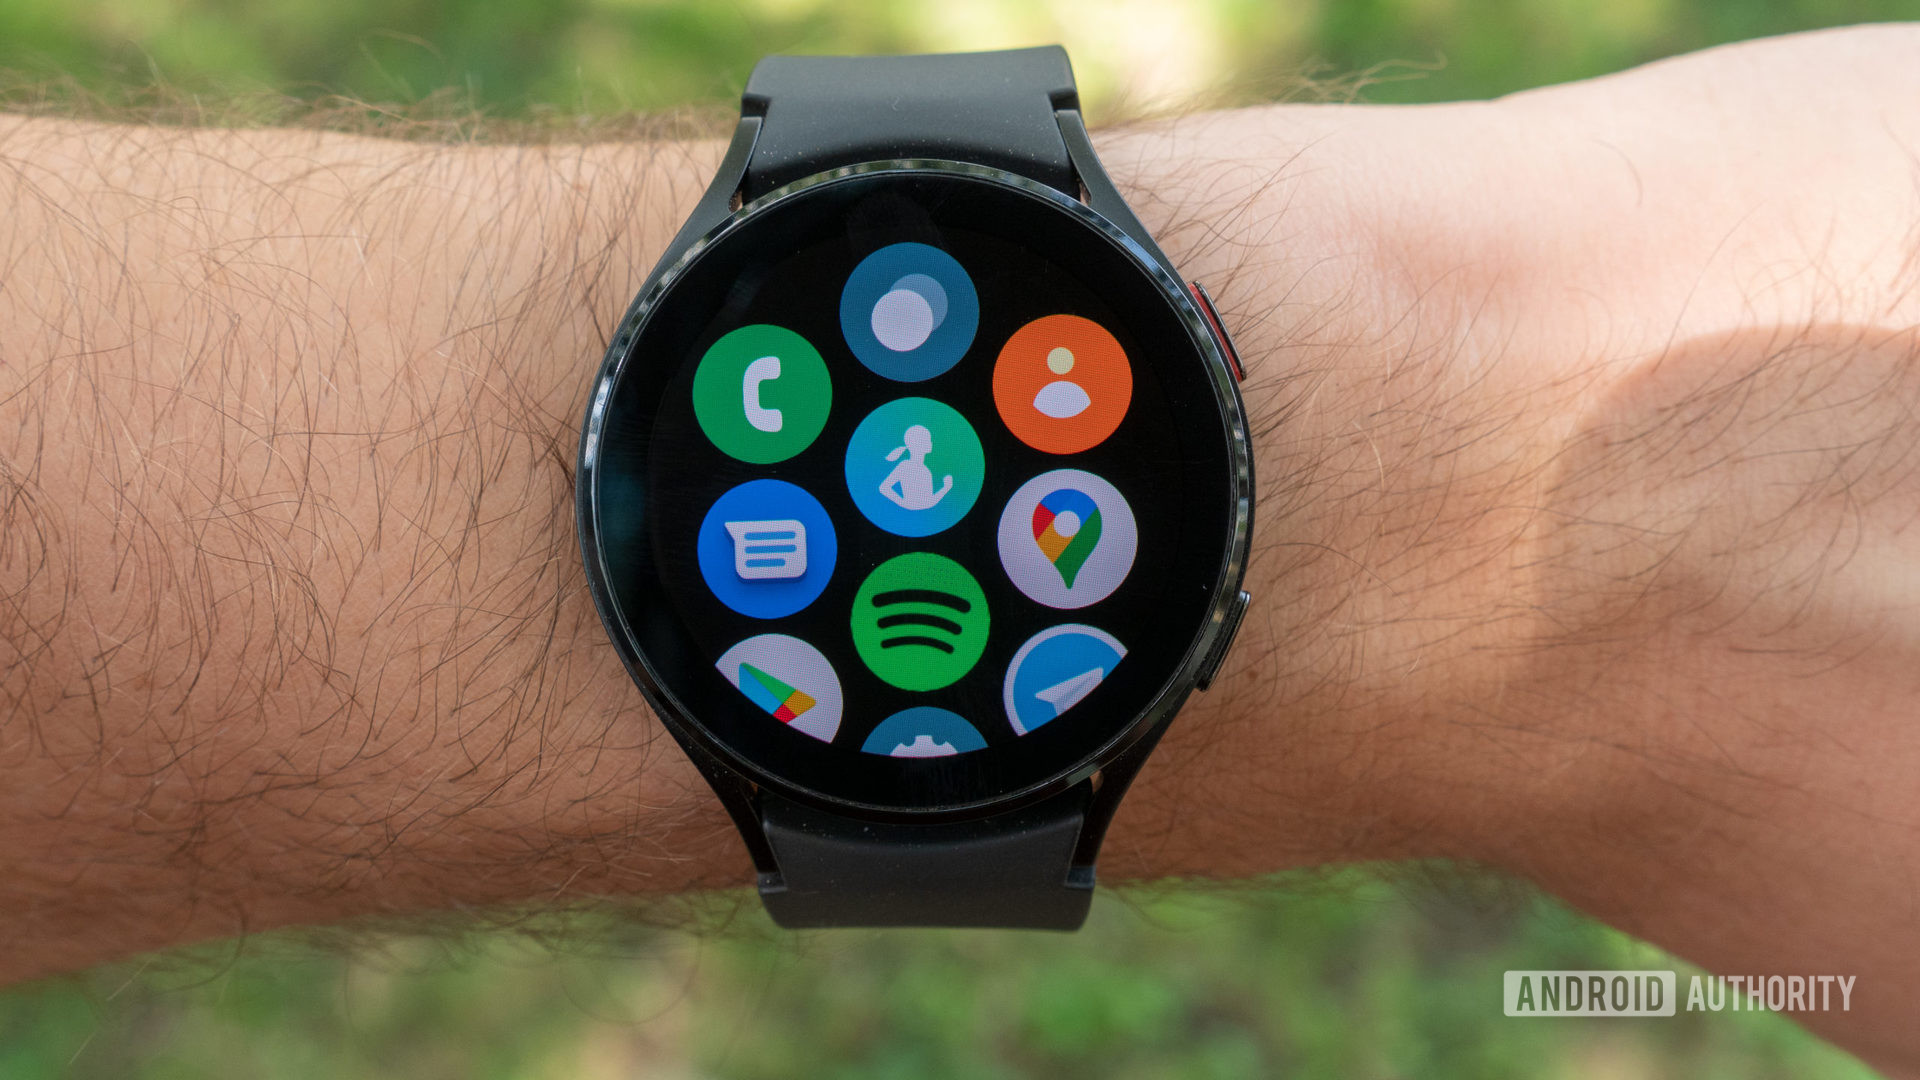 The Samsung Galaxy Watch 4 on a man's wrist displays the app screen.